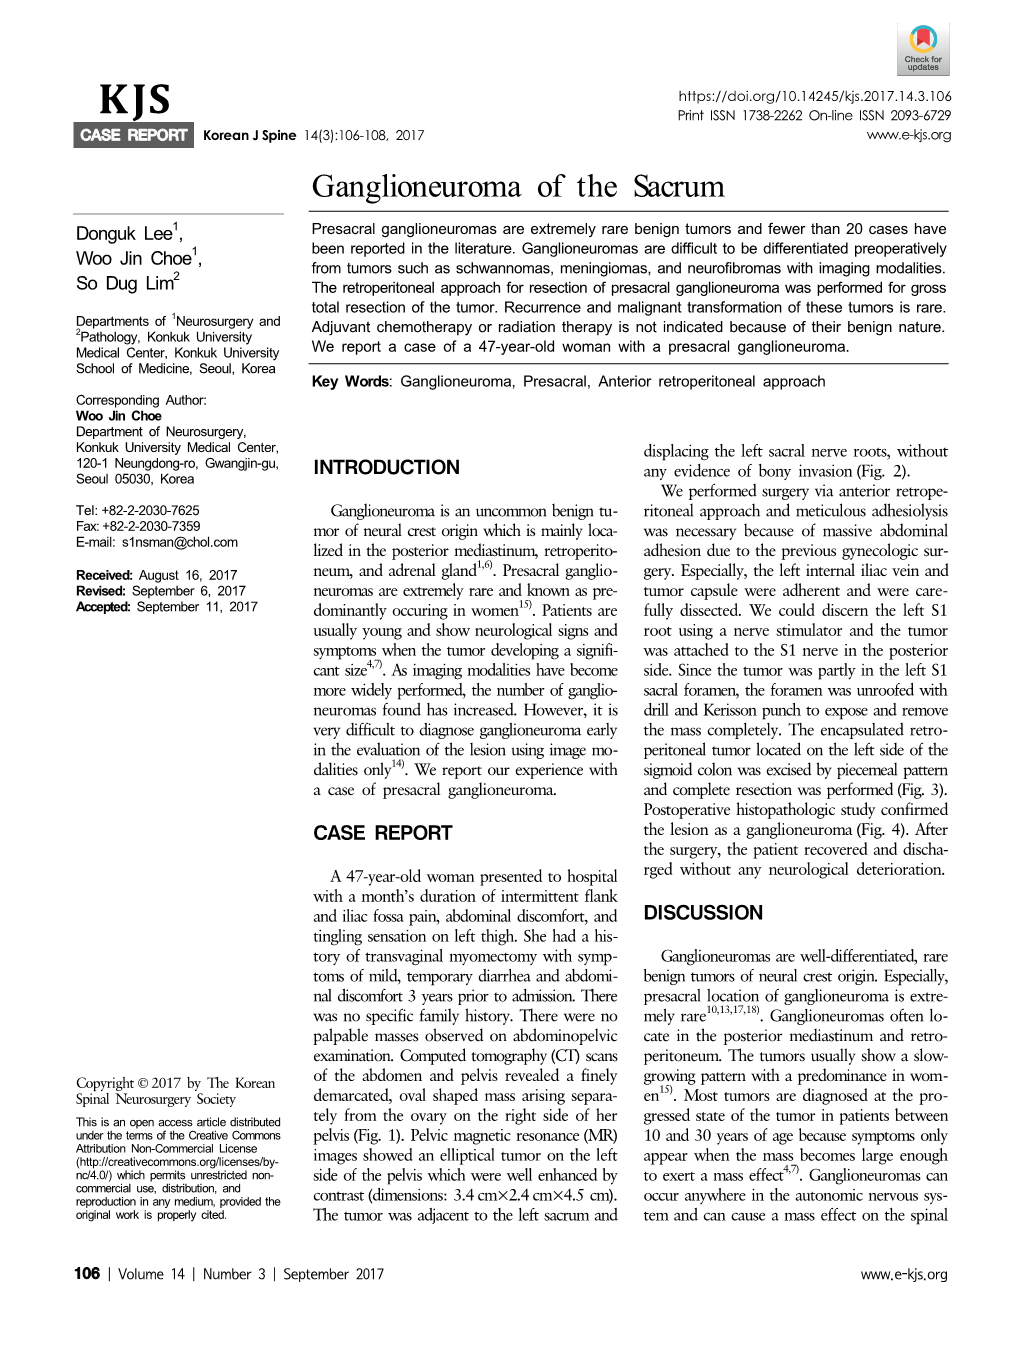 Ganglioneuroma of the Sacrum